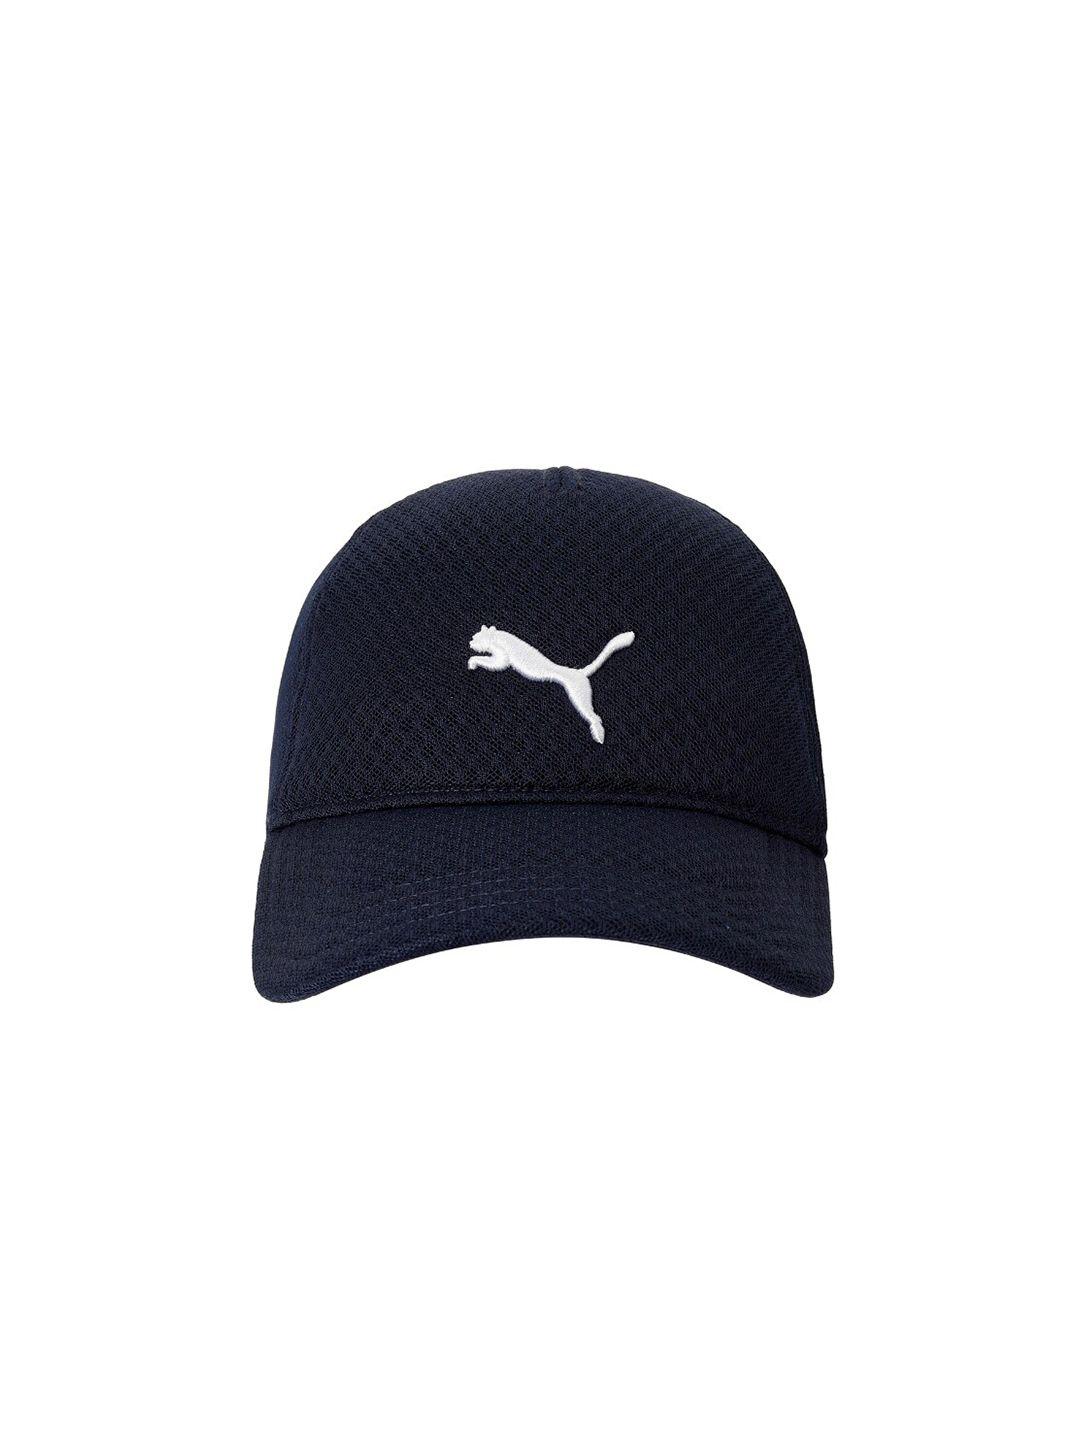 puma unisex navy blue printed baseball cap